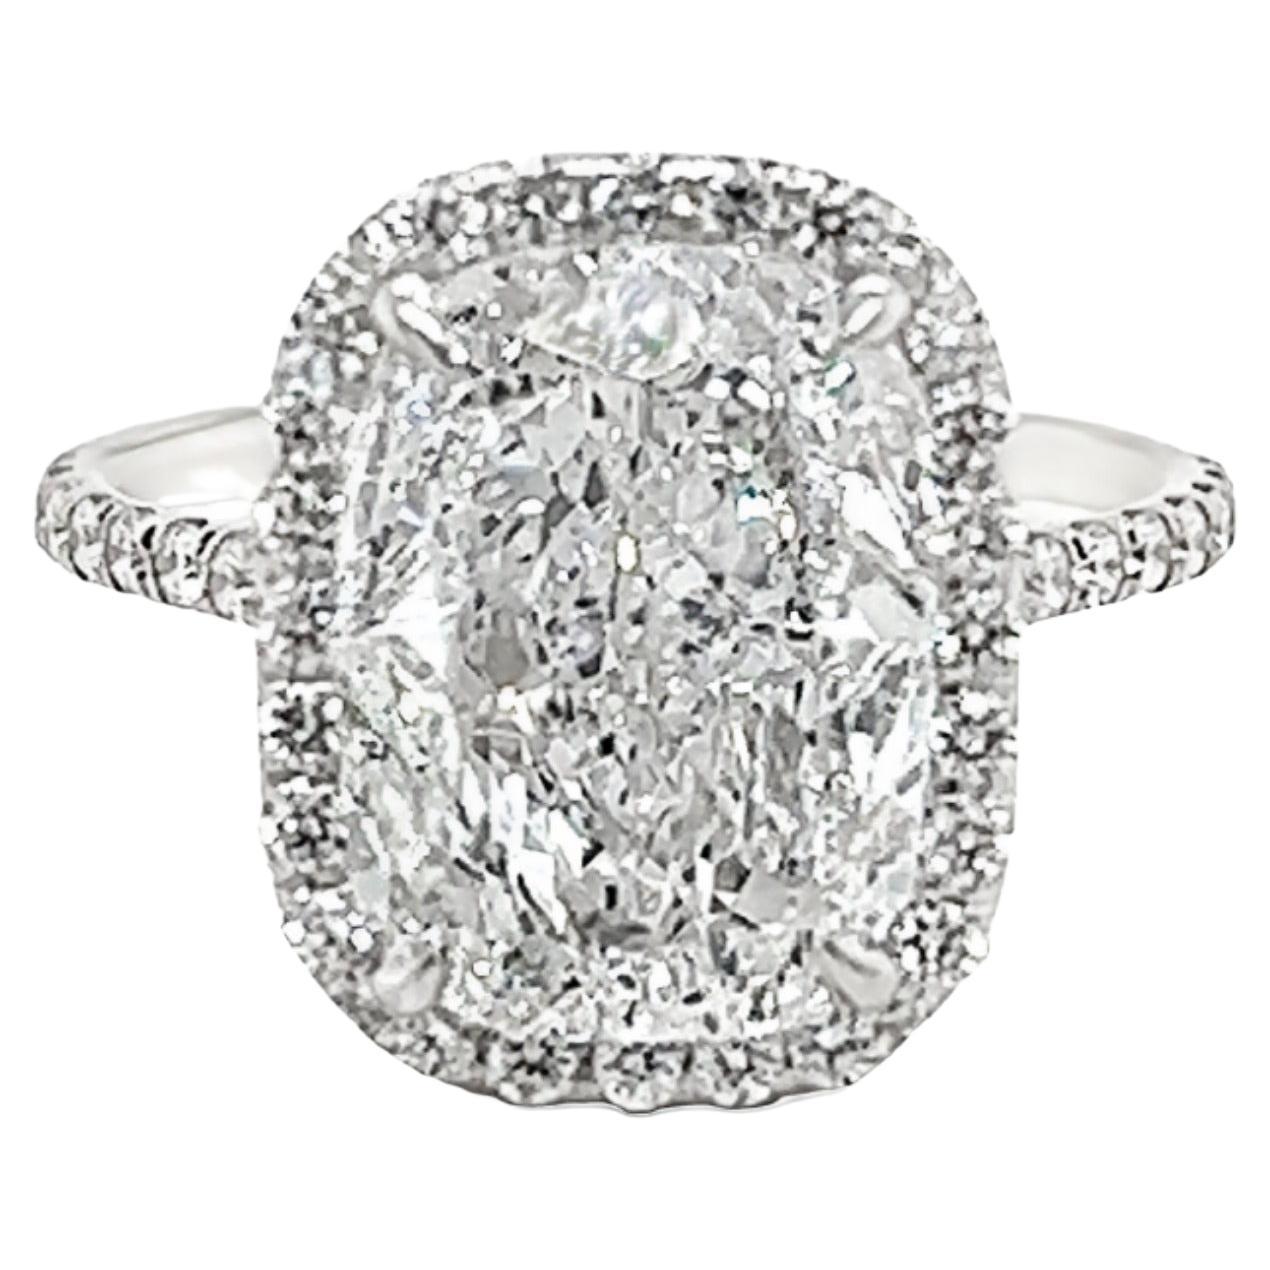 David Rosenberg 5.02 Carat Cushion Cut D/SI2 GIA Diamond Engagement Ring